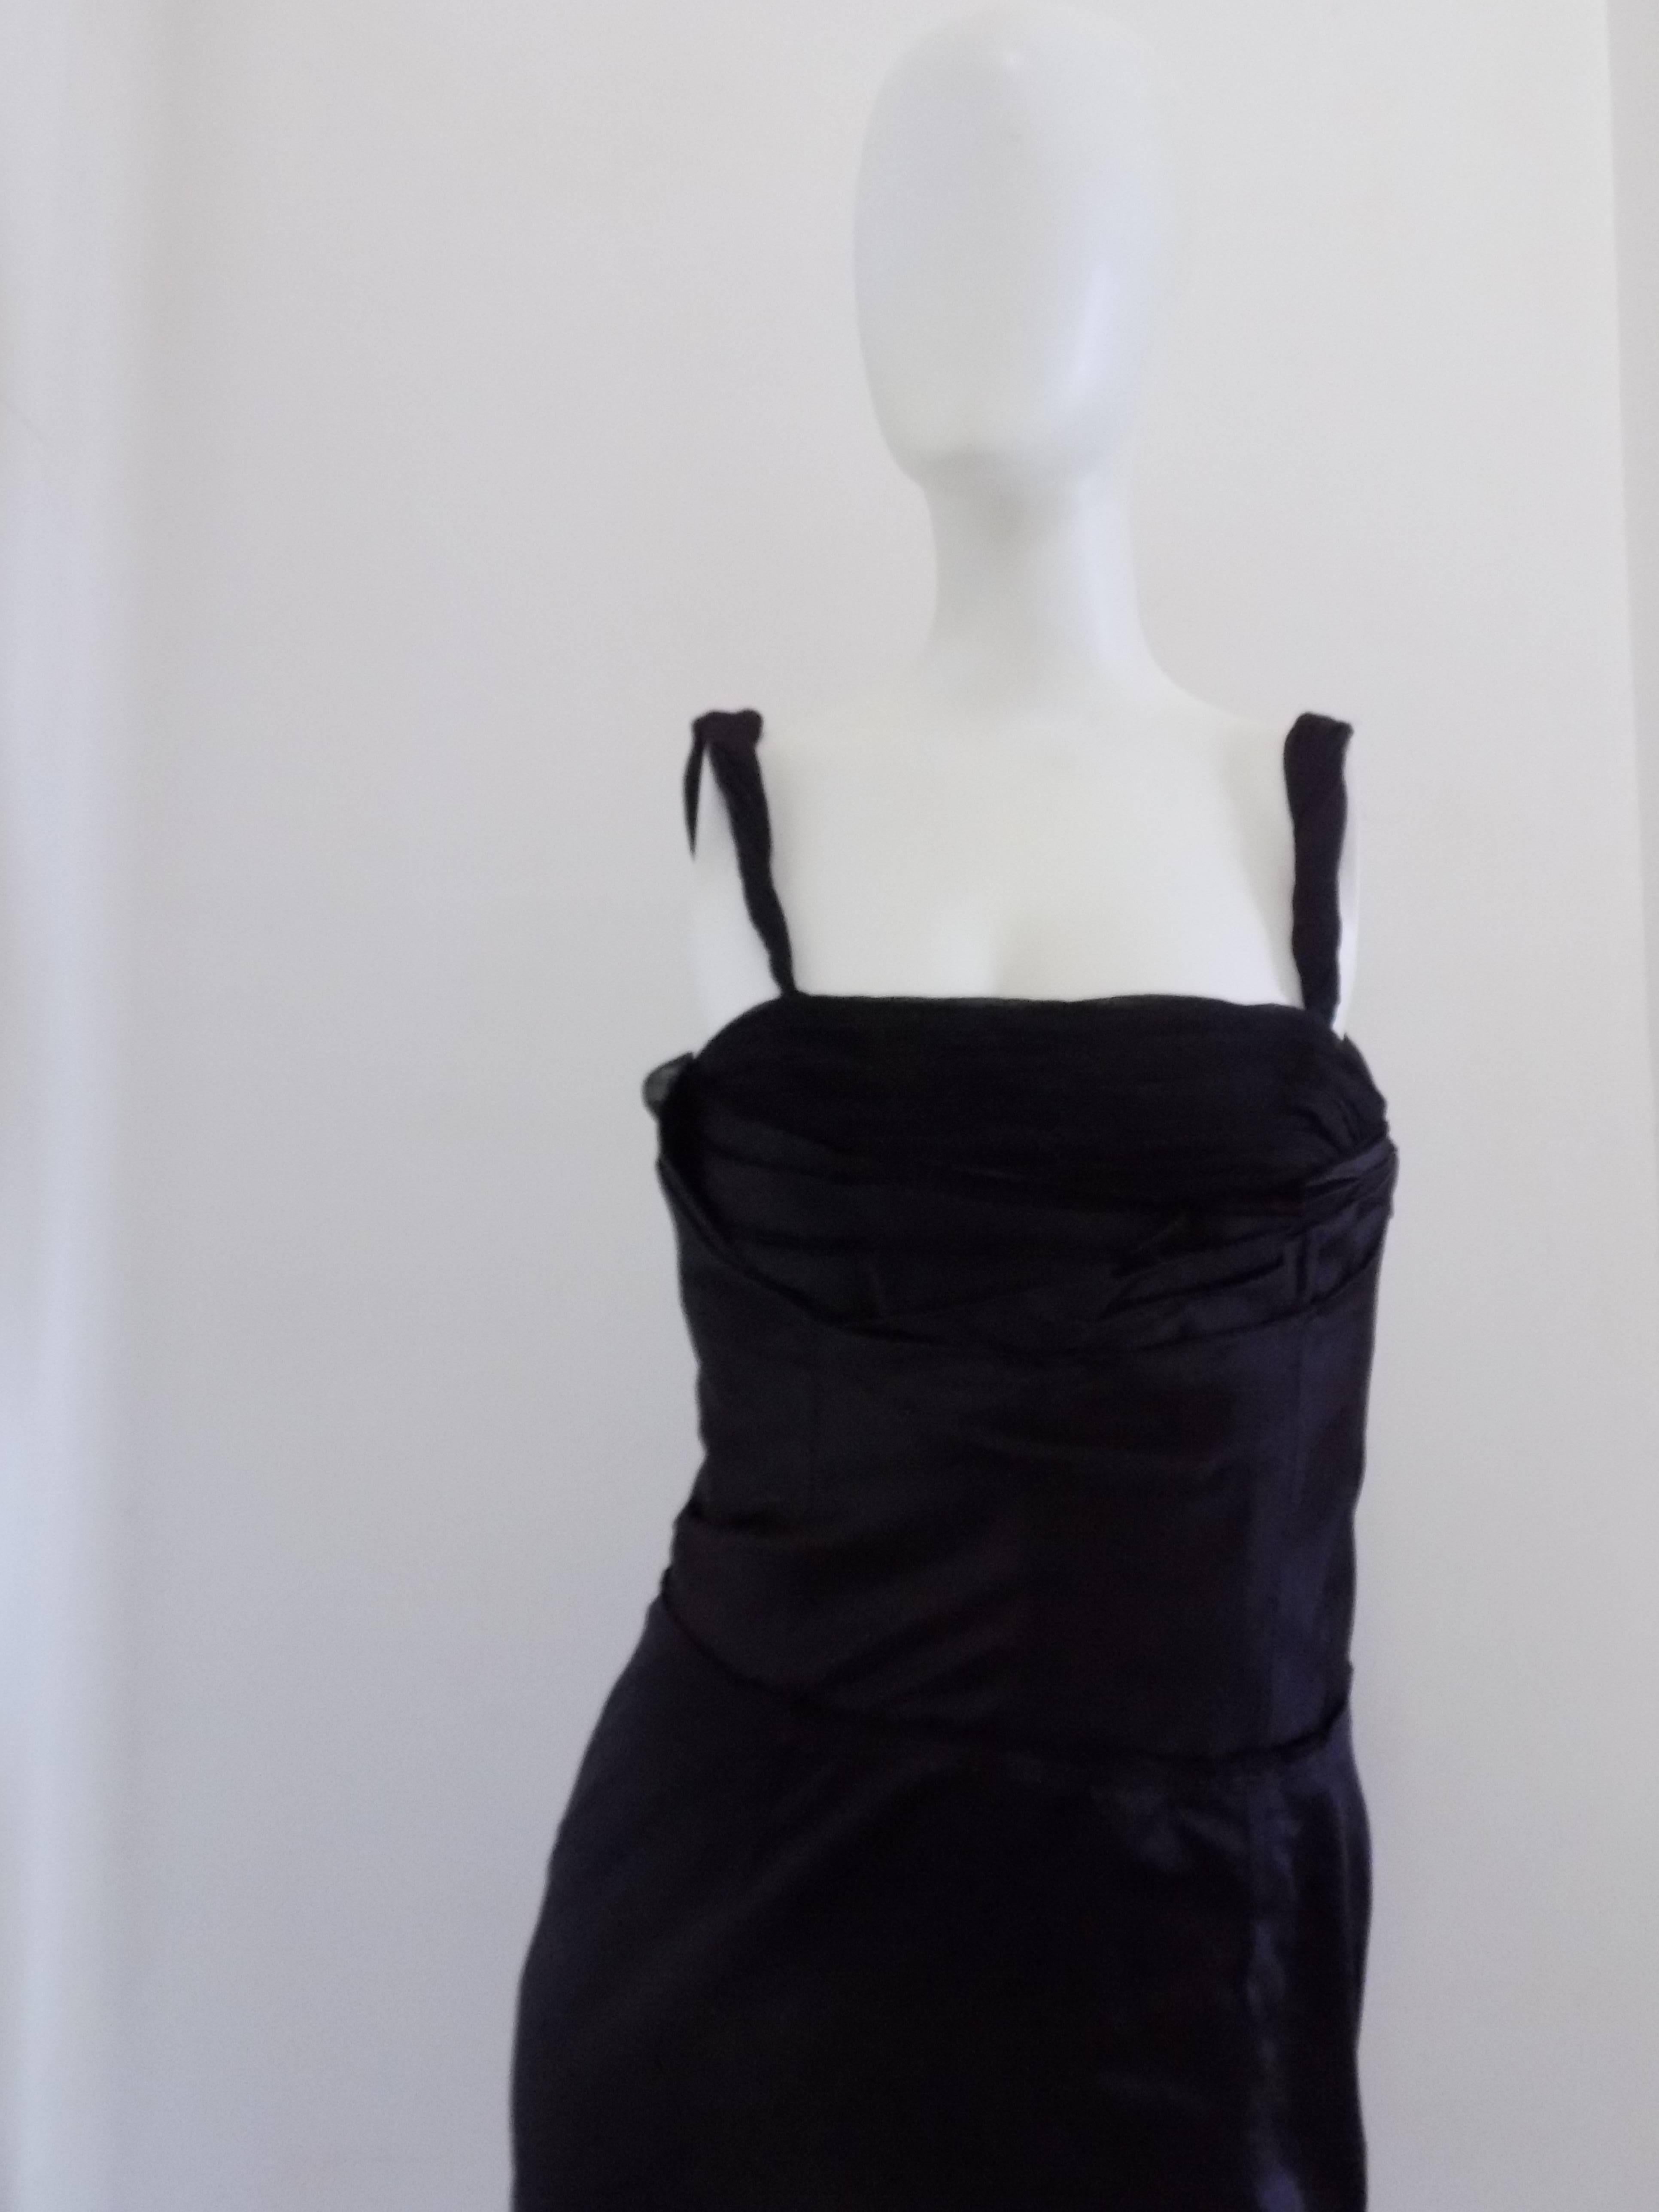 Prada Black Dress NWOT

italian size 40

composition silk, acetatate

total lenght 107 cm

bust 74 cm